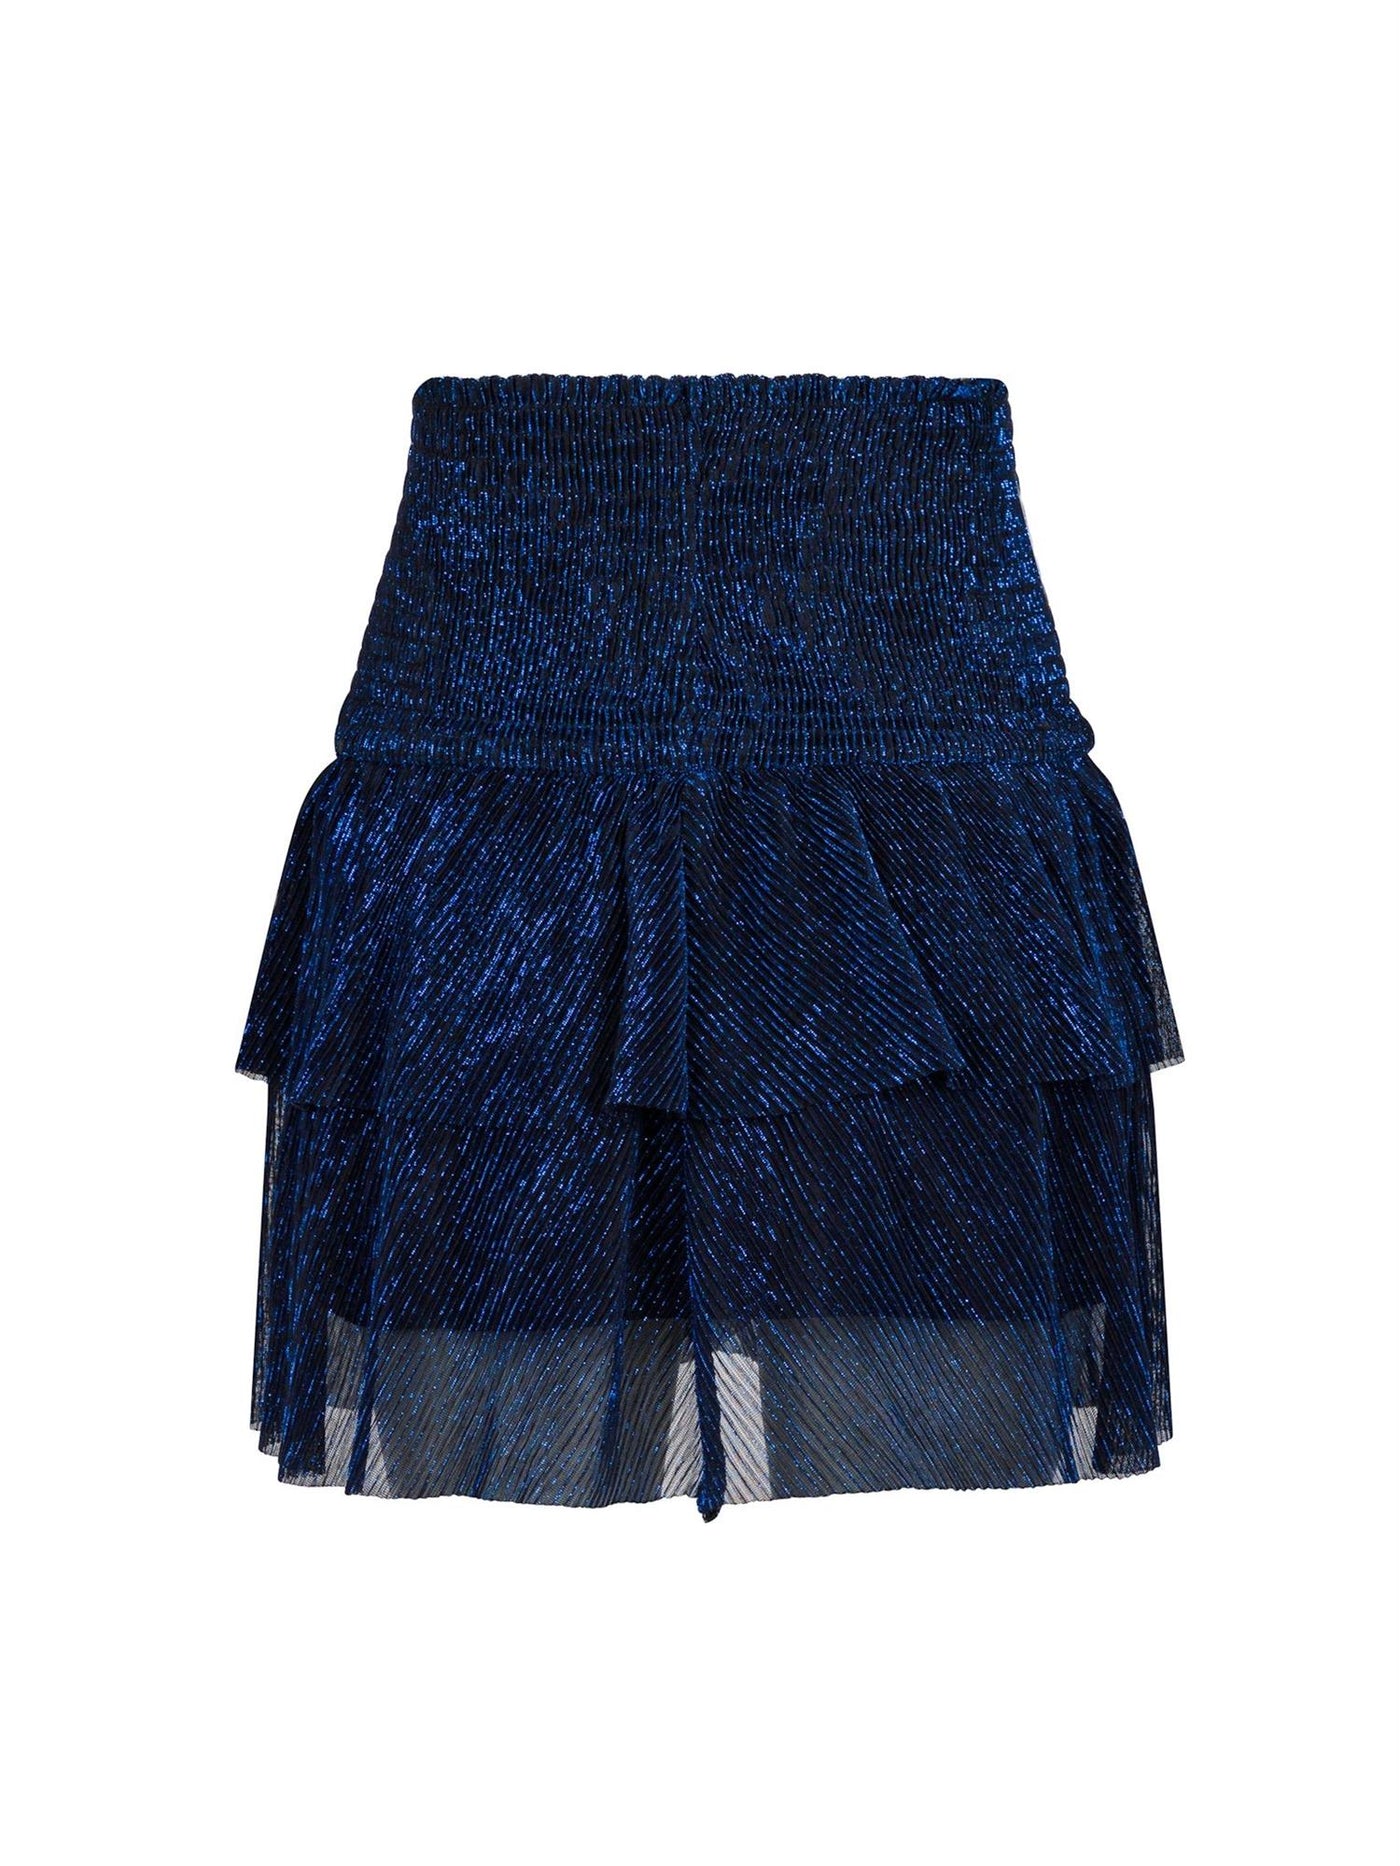 Carin Glitz Skirt Blue